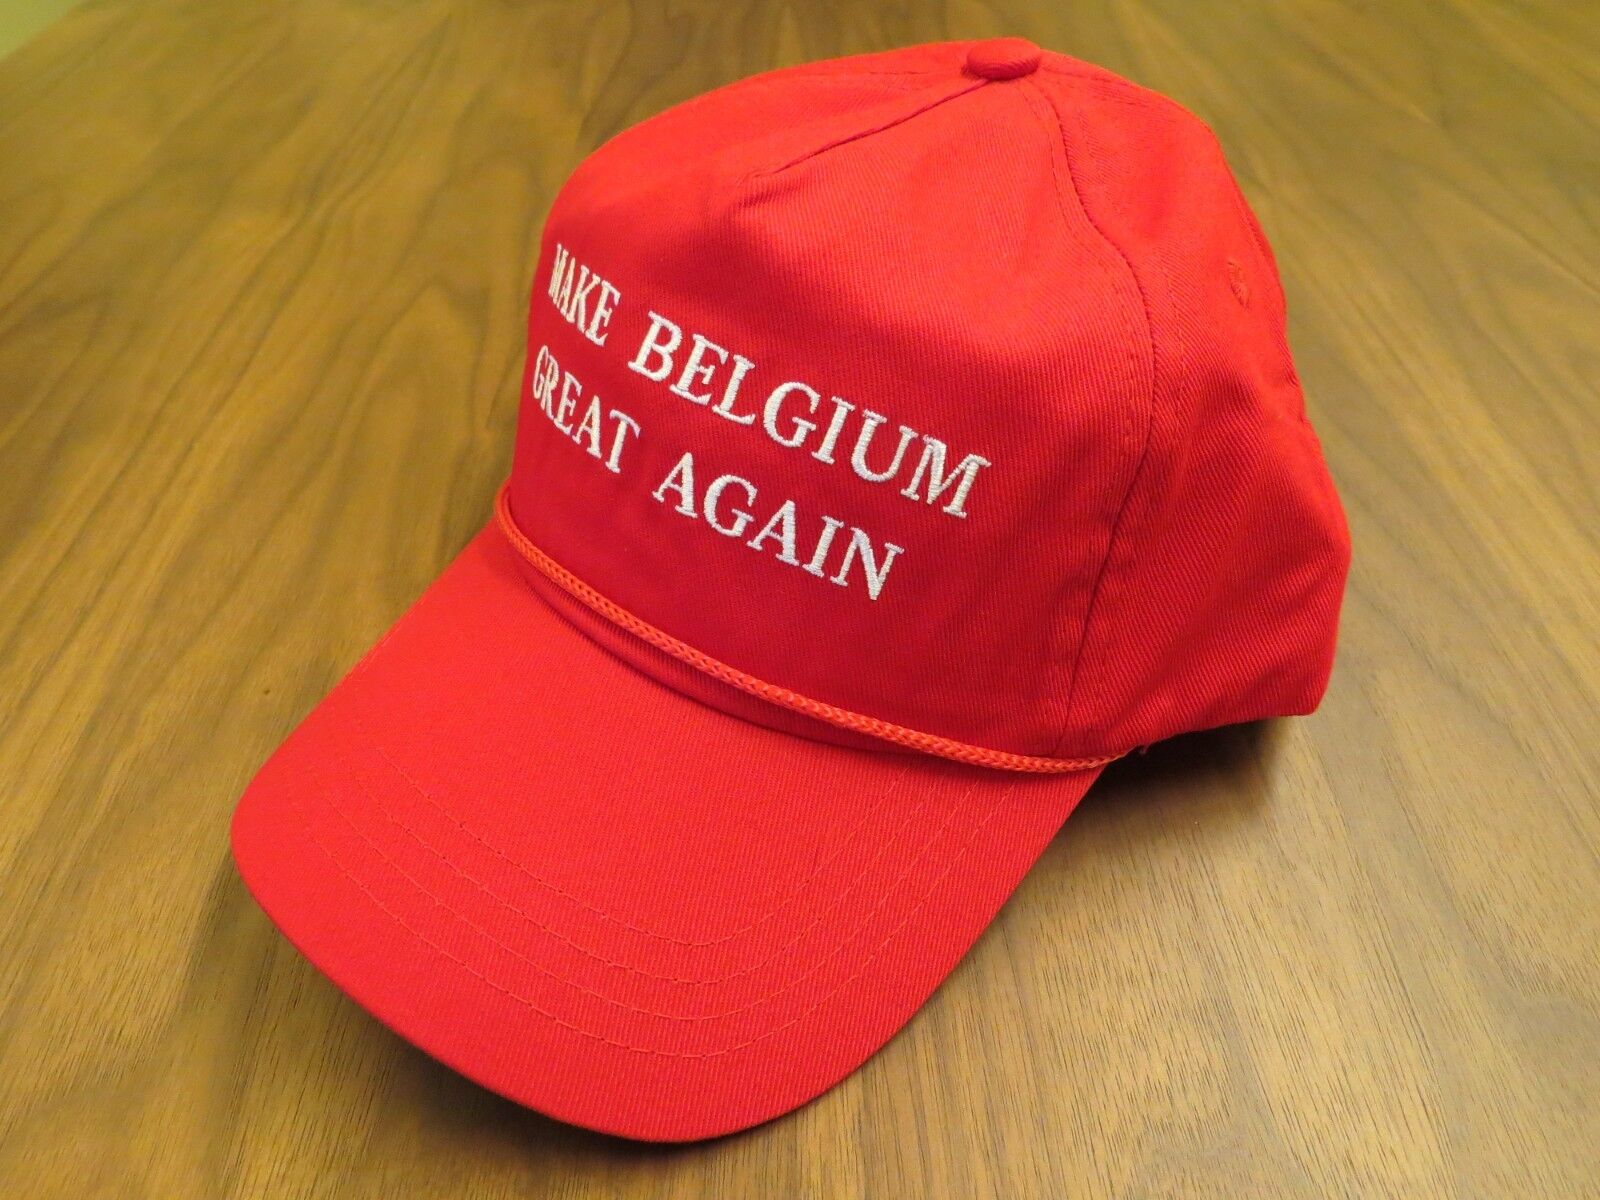 MAKE BELGIUM GREAT AGAIN USA HAT DONALD TRUMP EMBROIDERED CAP RED BRUSSELS EU